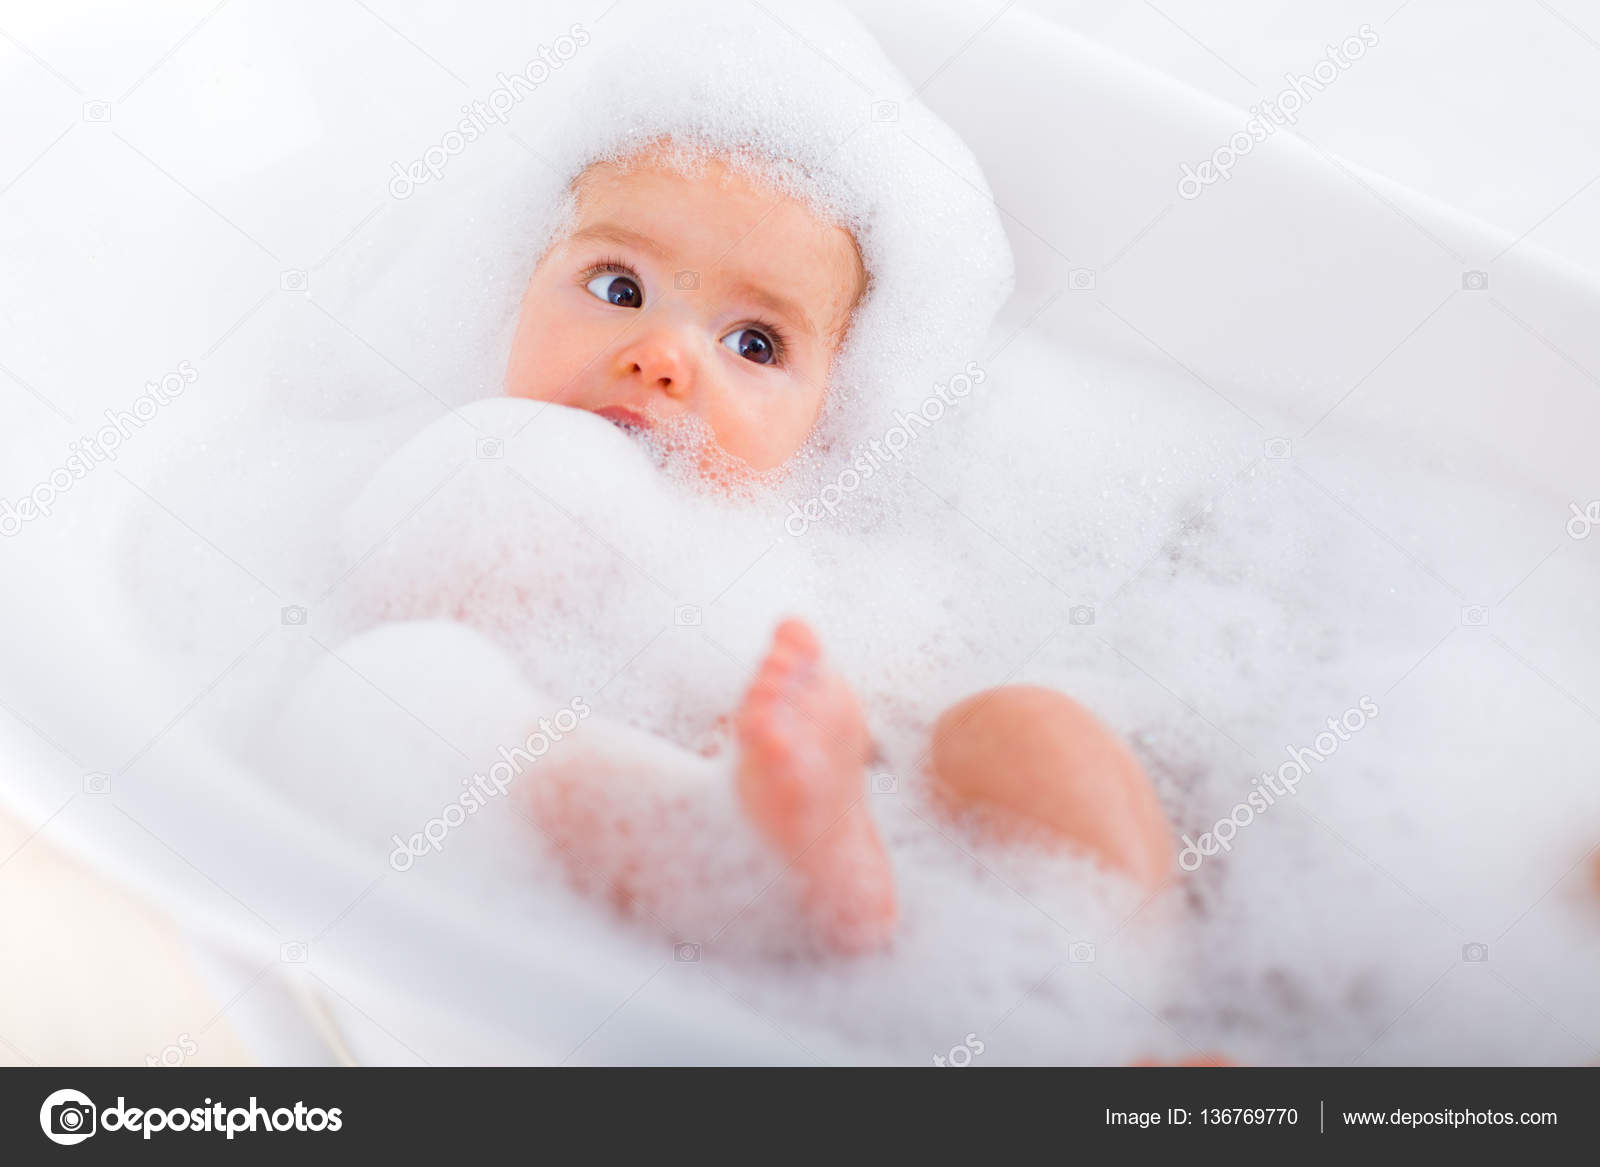 https://st3.depositphotos.com/1809100/13676/i/1600/depositphotos_136769770-stock-photo-bubble-bath-foam.jpg